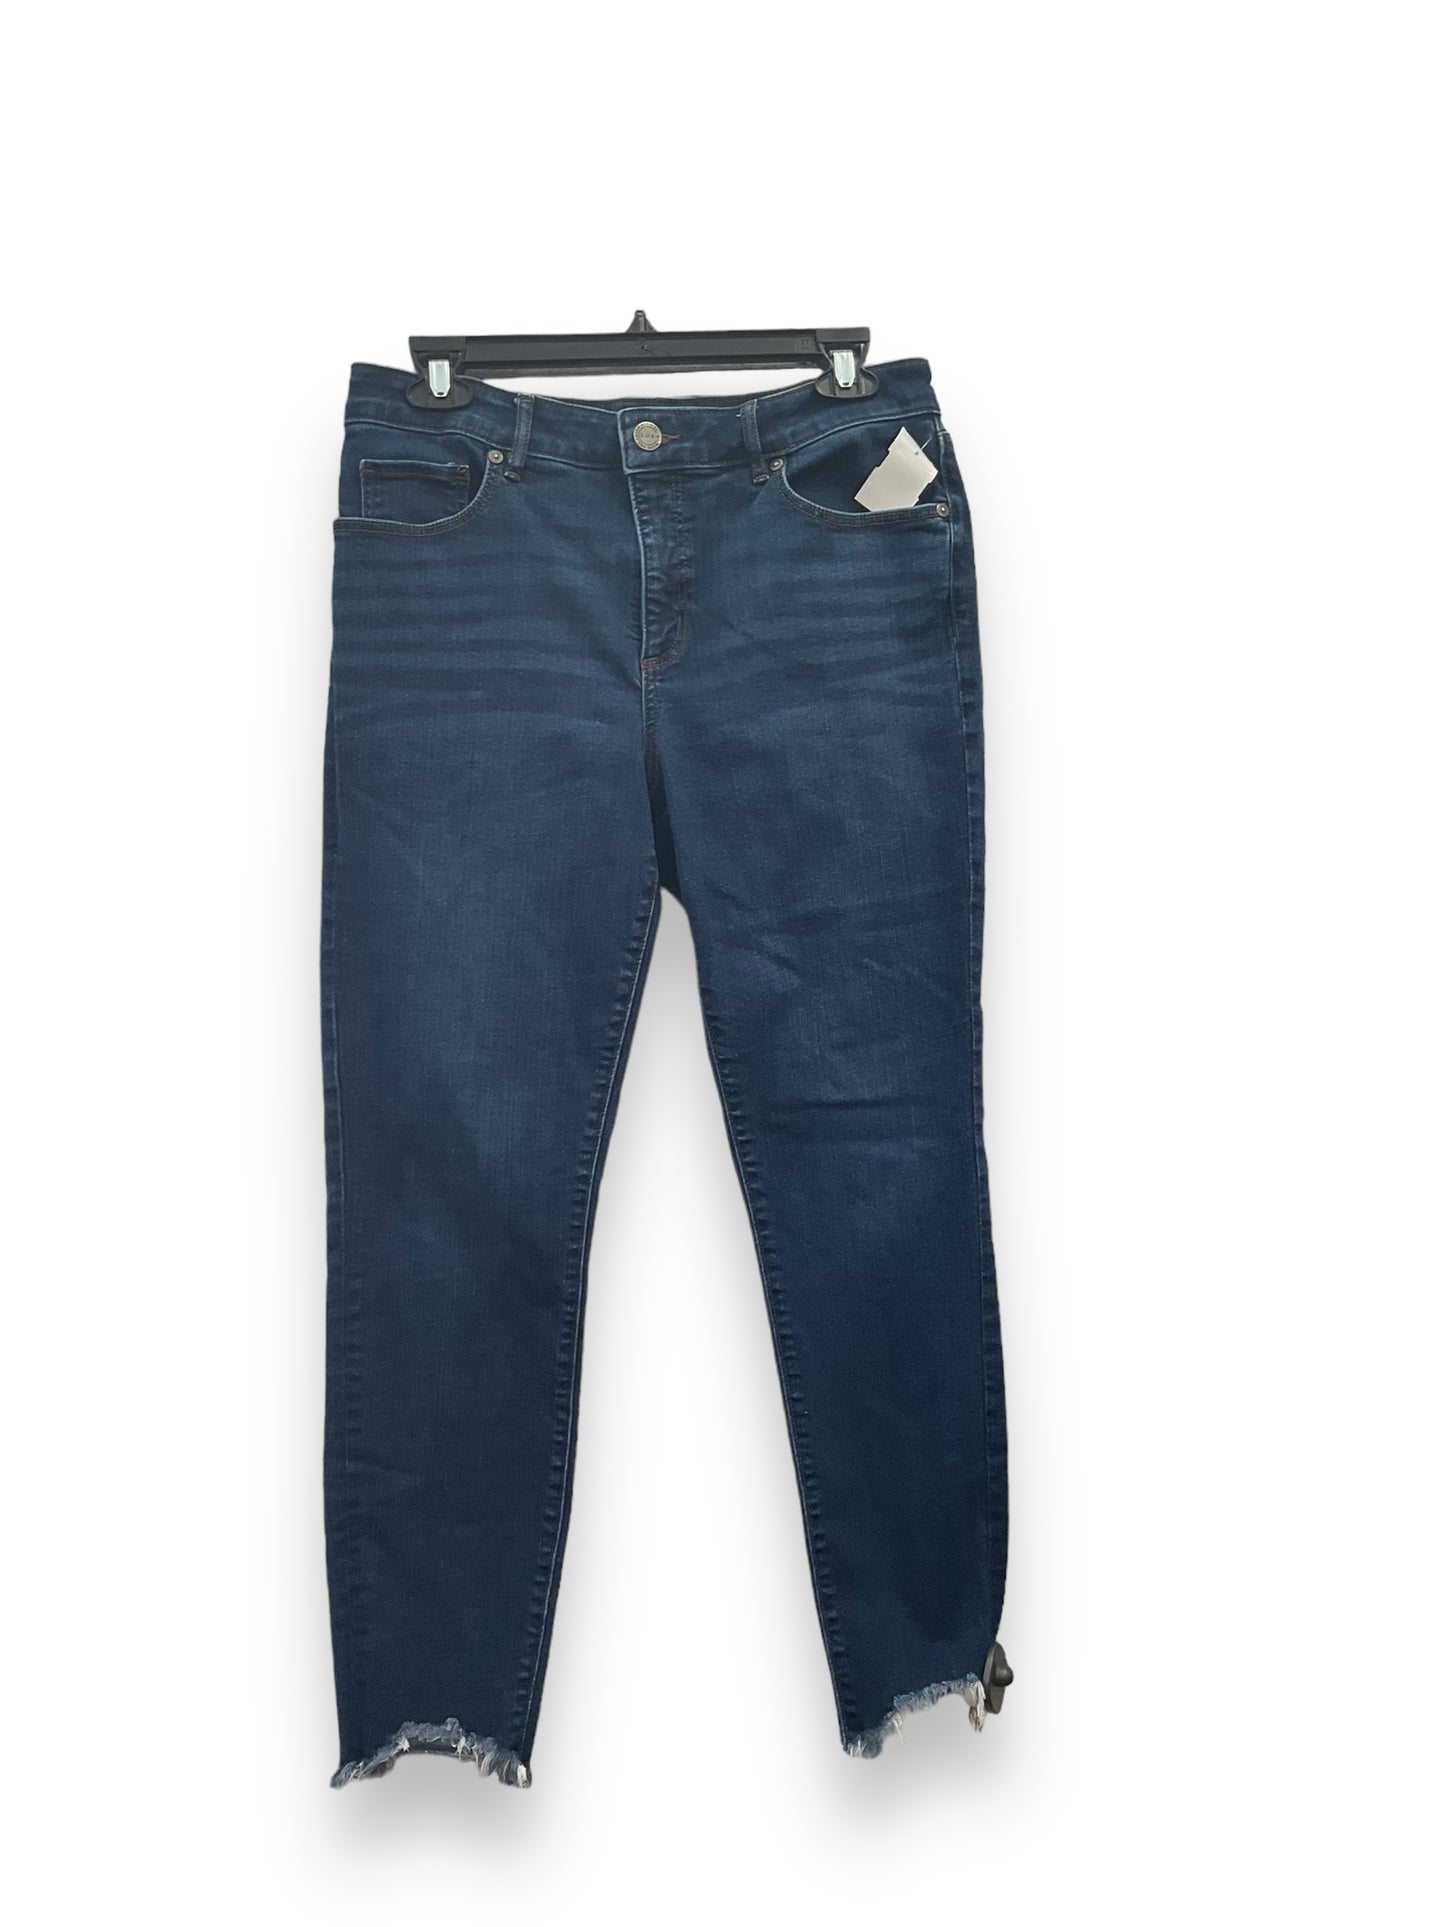 Jeans Skinny By Loft  Size: 8